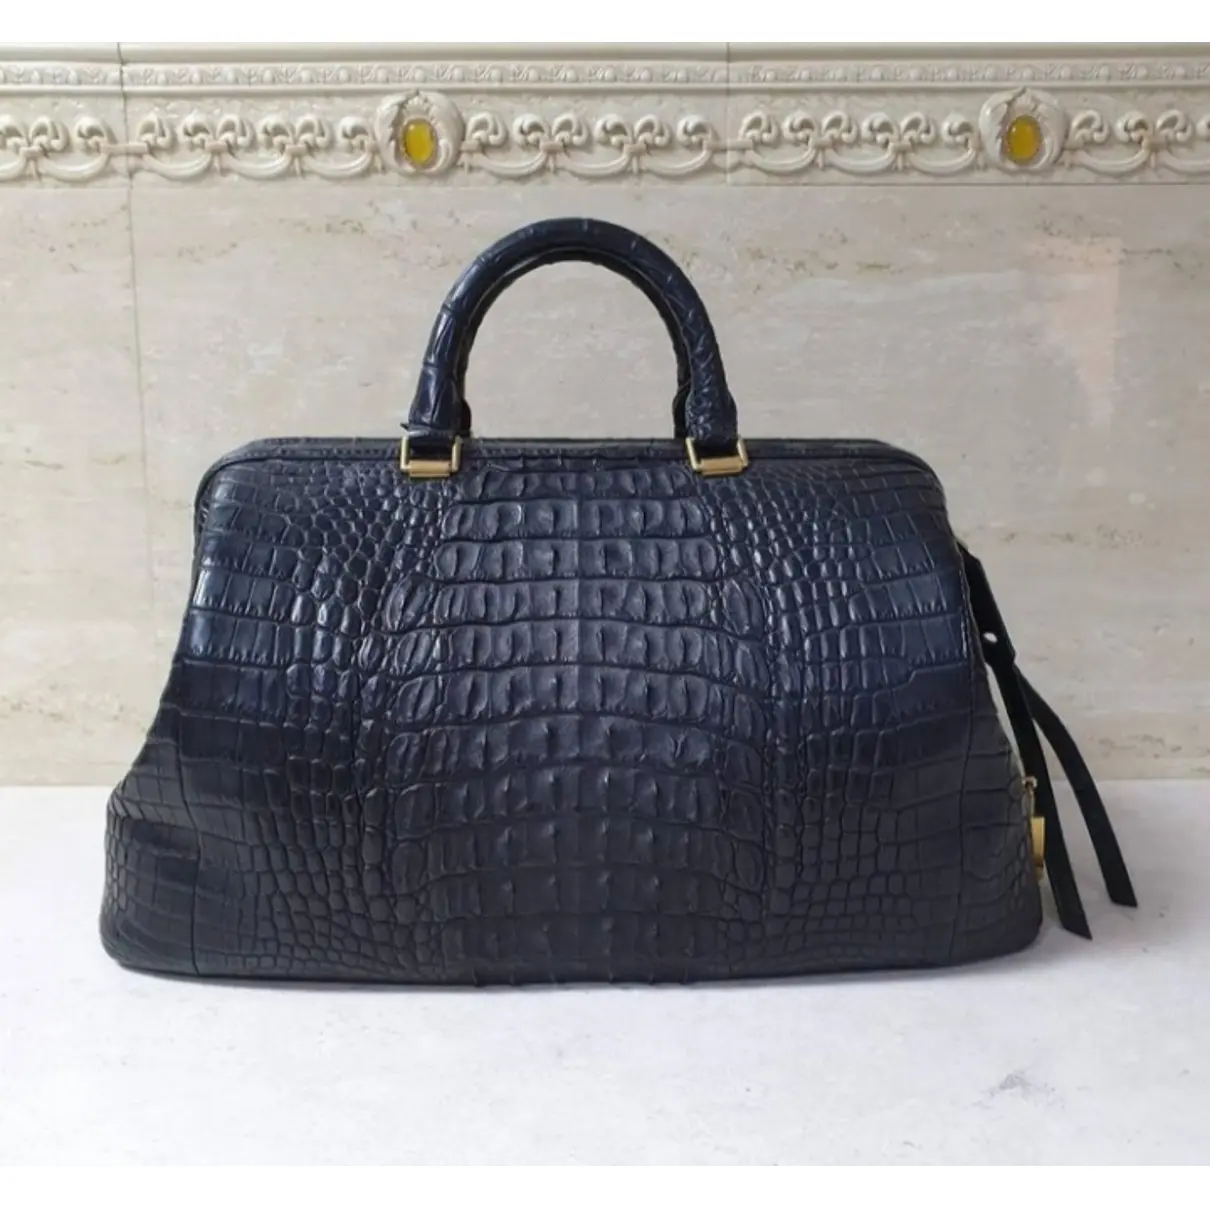 Buy Celine Crocodile handbag online